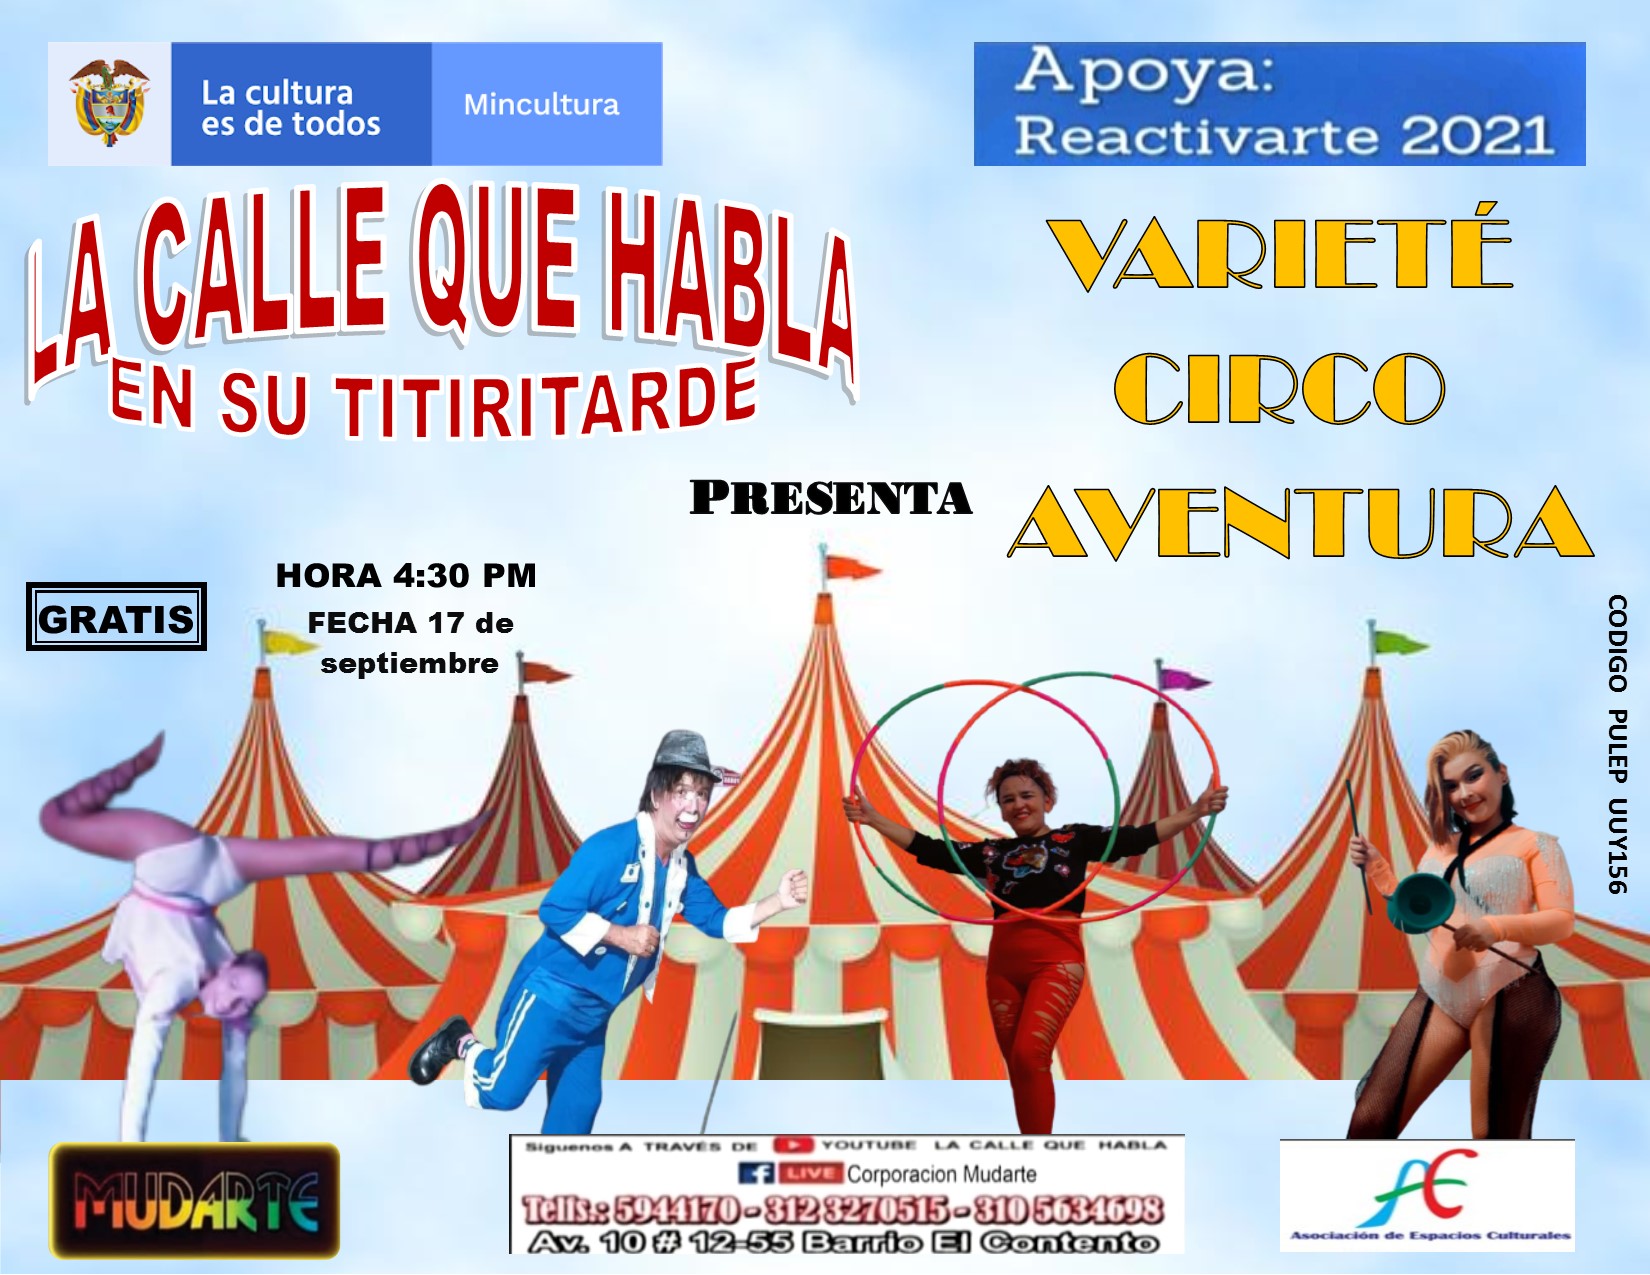 TITIRITARDE "Varieté Circo Aventura"